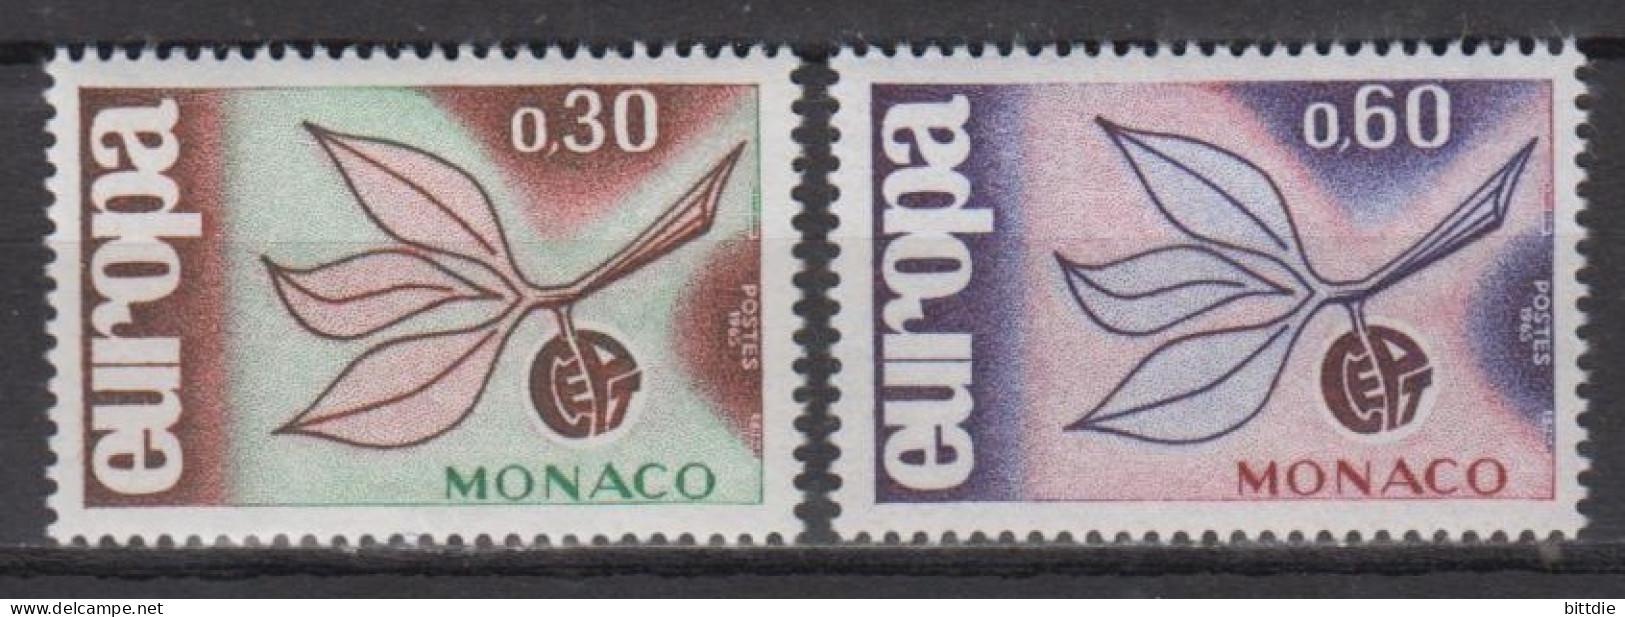 Europa/Cept, Monaco  810/11 , Xx  (S 1765) - 1965